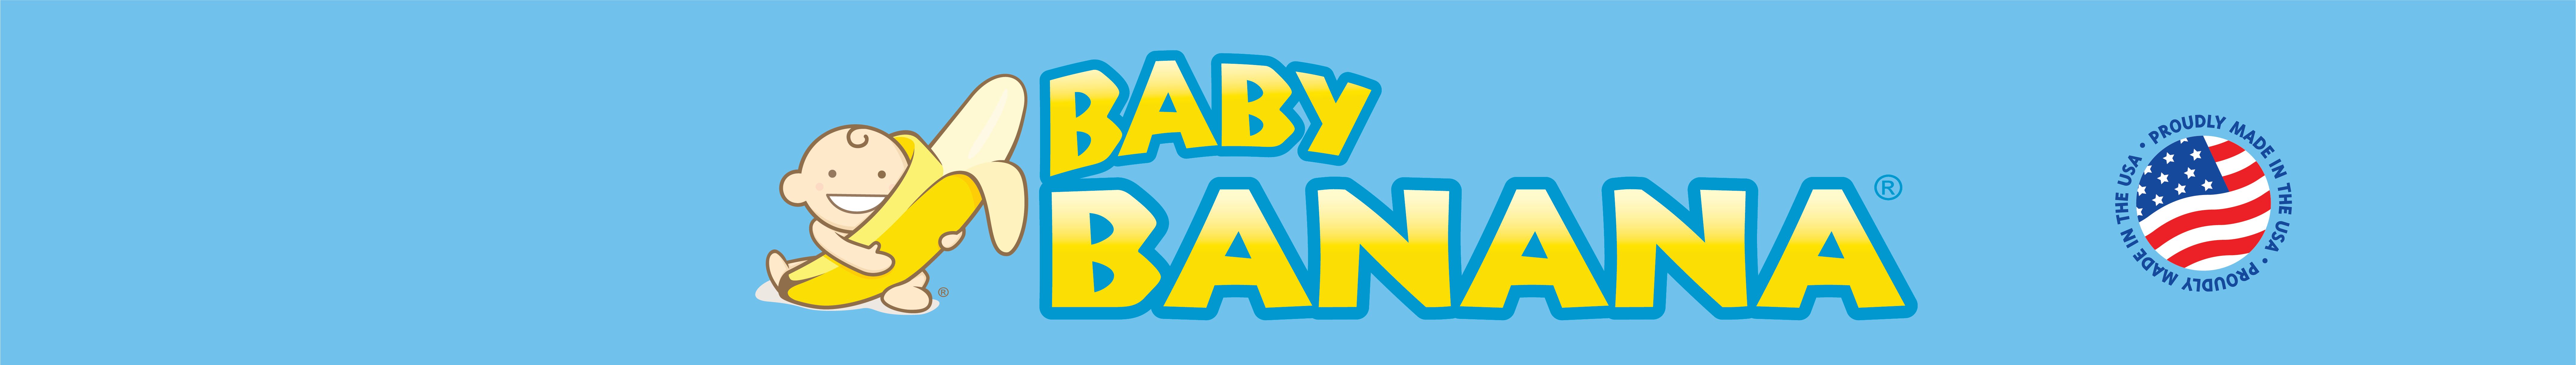 Baby Banana logo